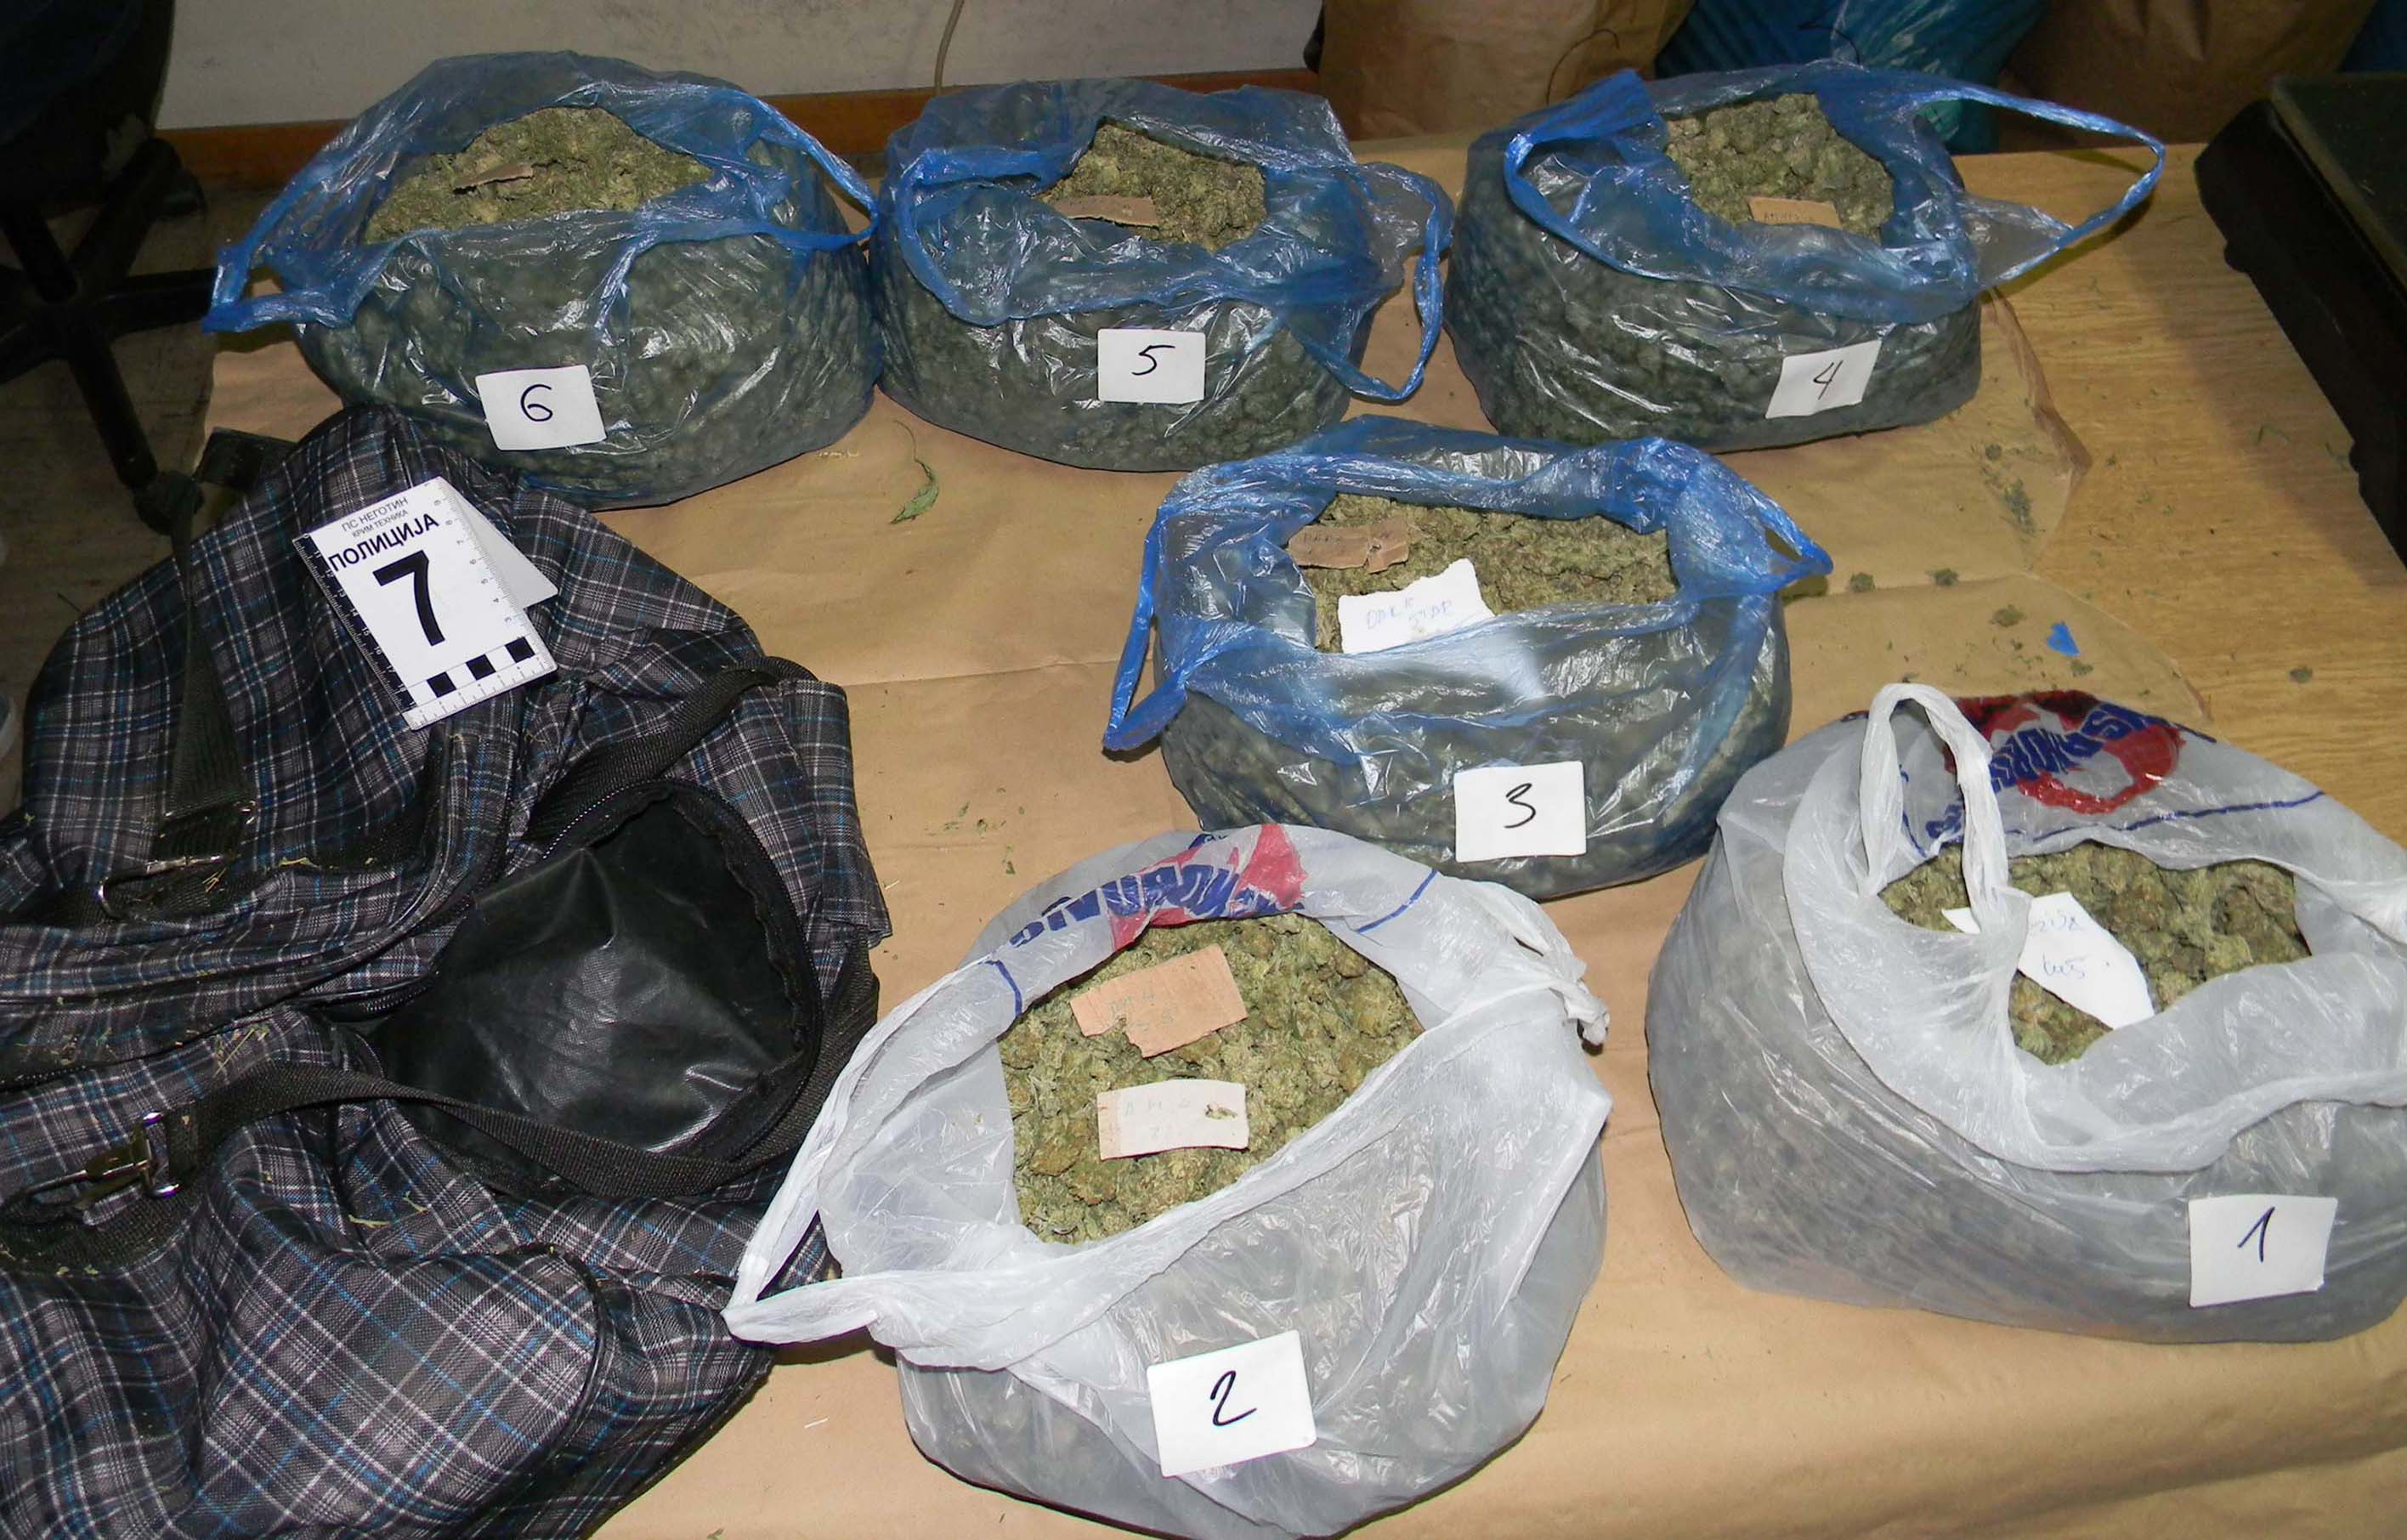 Zaplenjeno više od 28 kilograma marihuane, uhapšene dve osobe